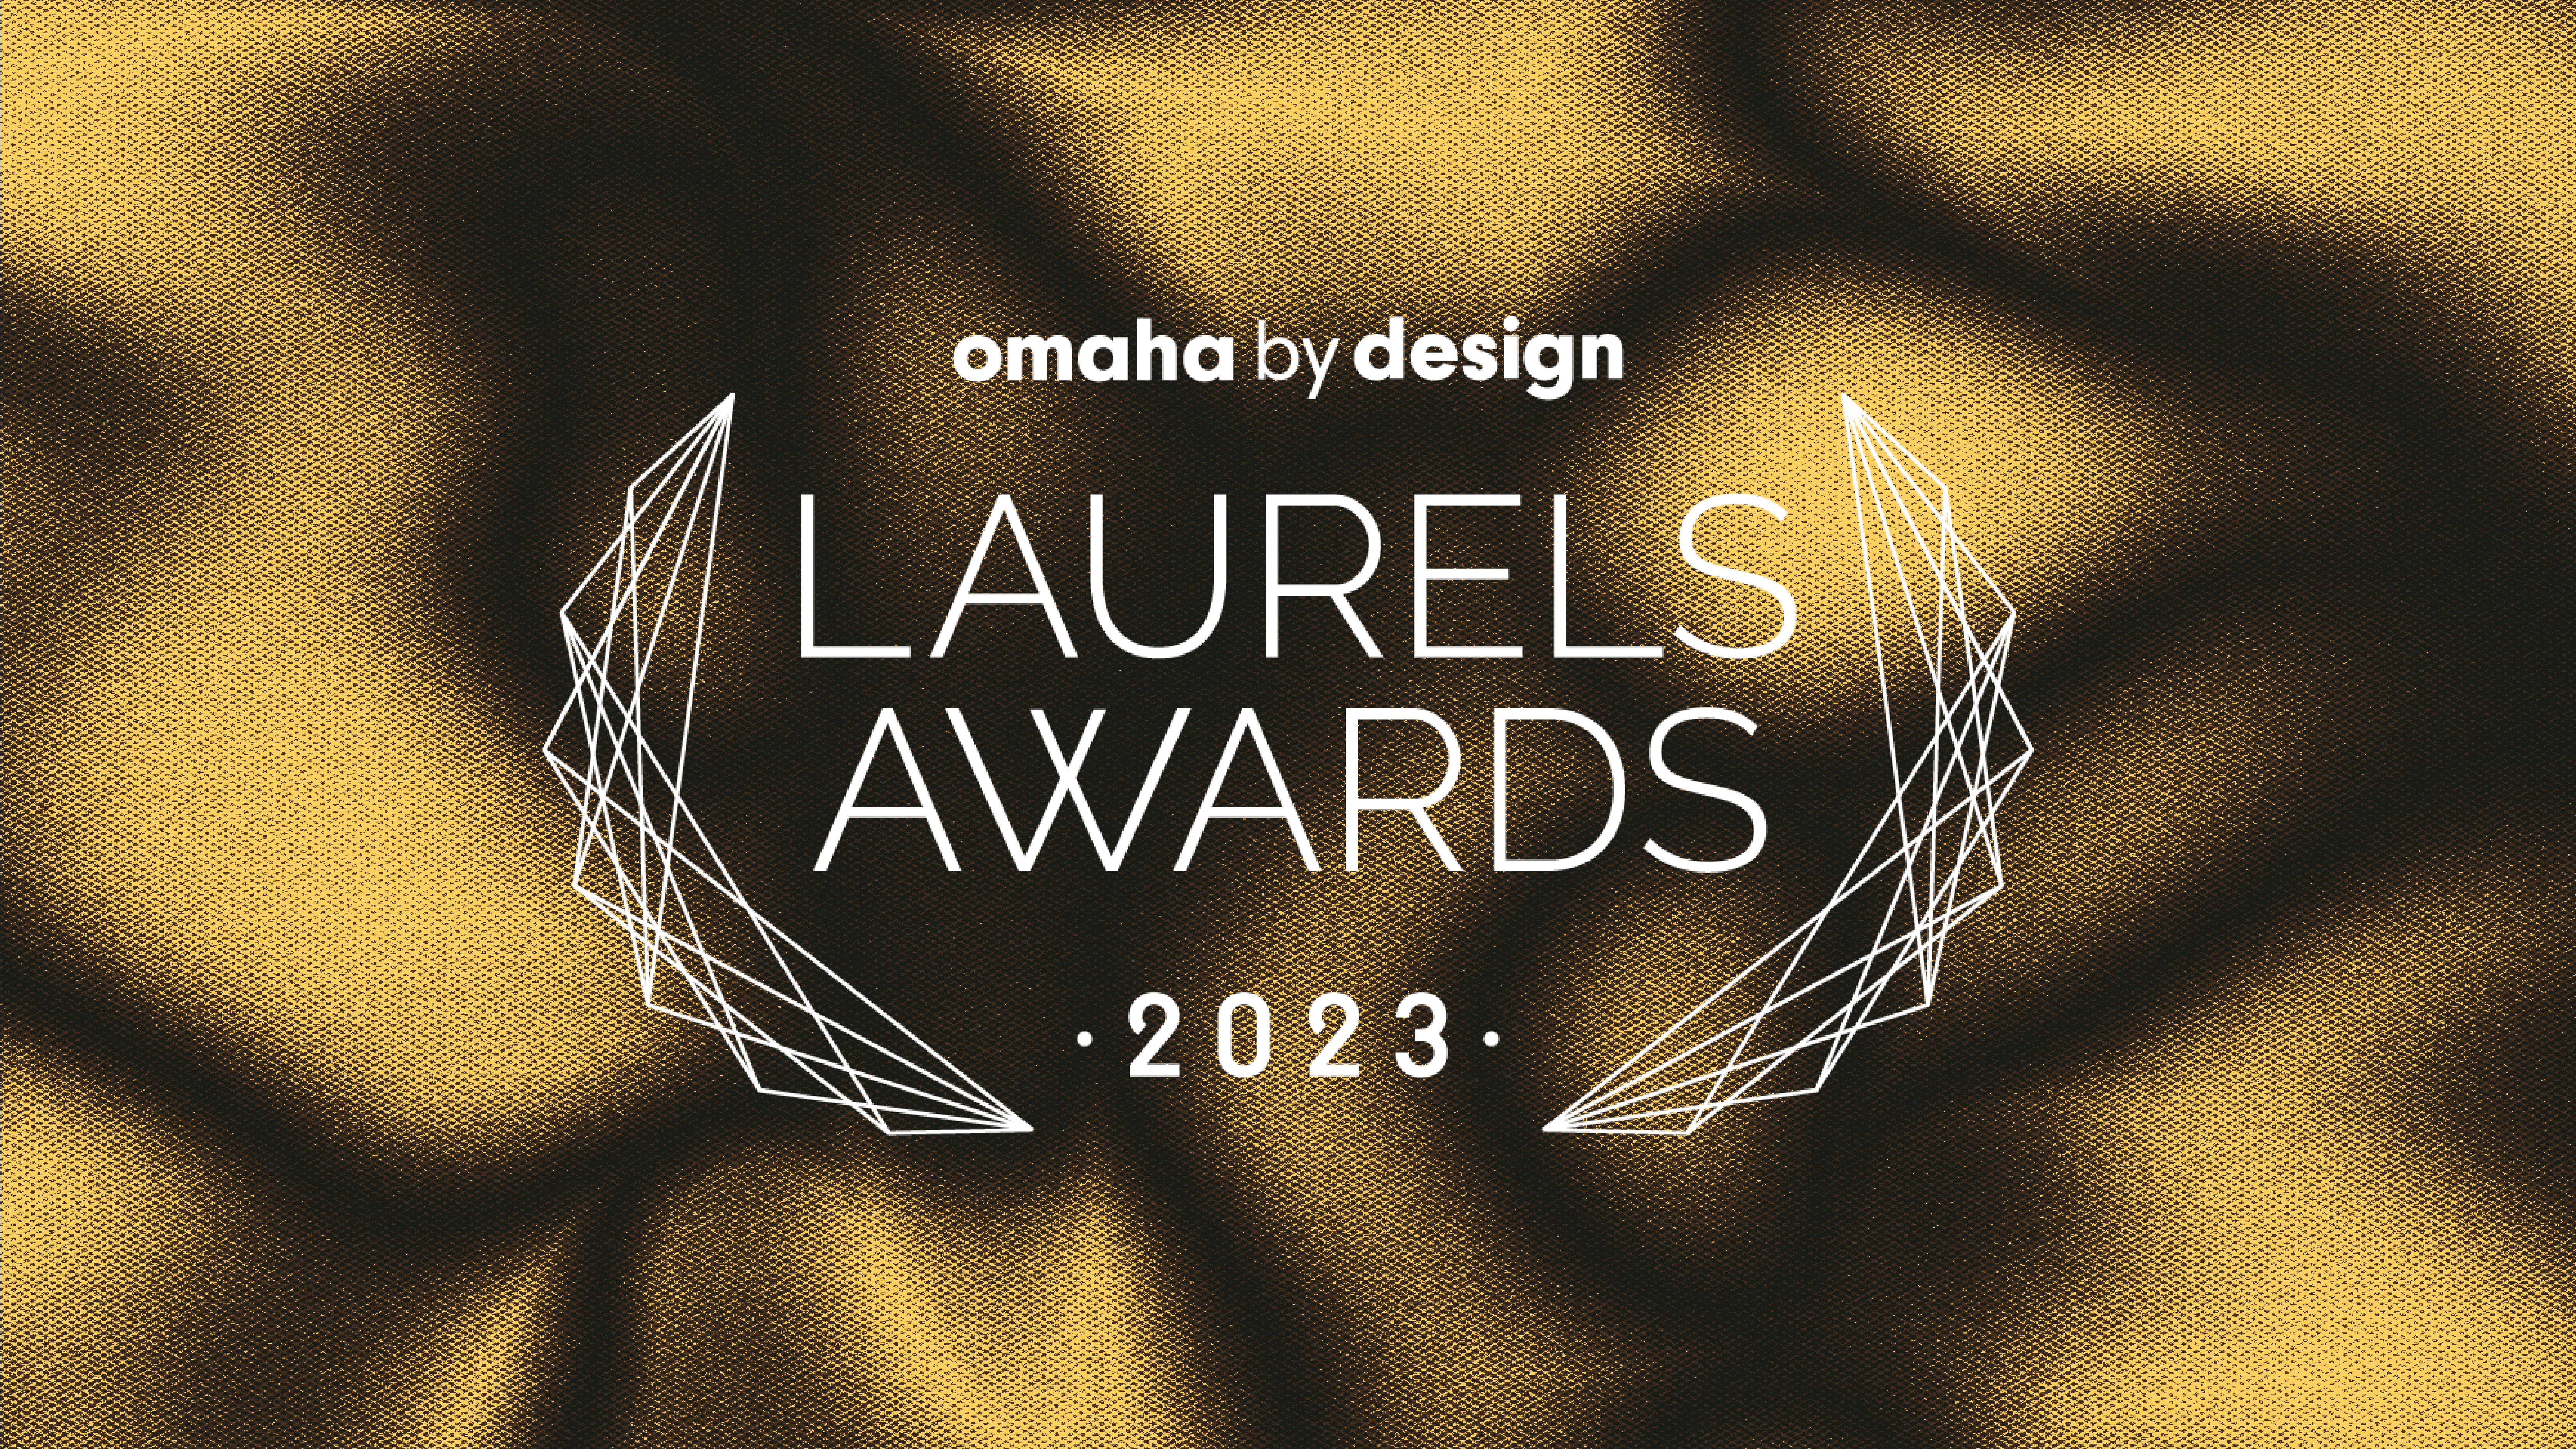 Presenting the 2023 LAURELS AWARDS